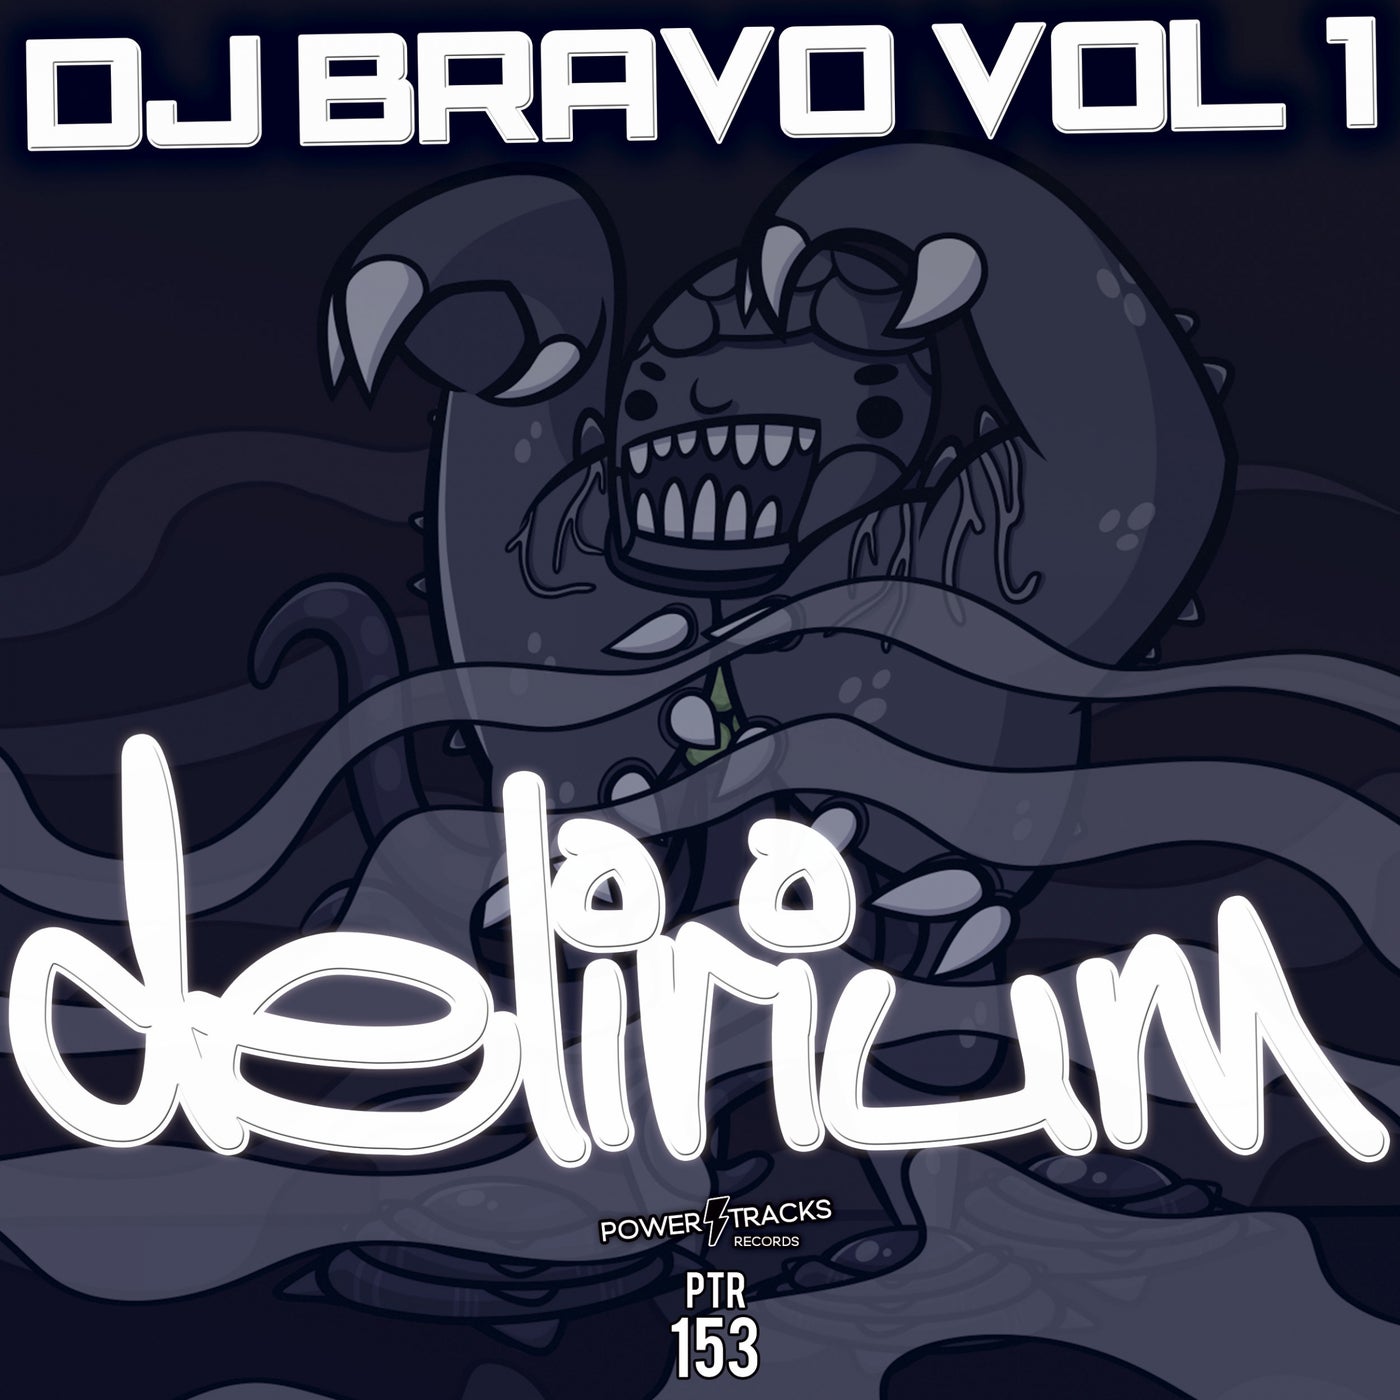 Power tracks. DJ Bravo. DJ delirium. Delirium музыка. Digital delirium.